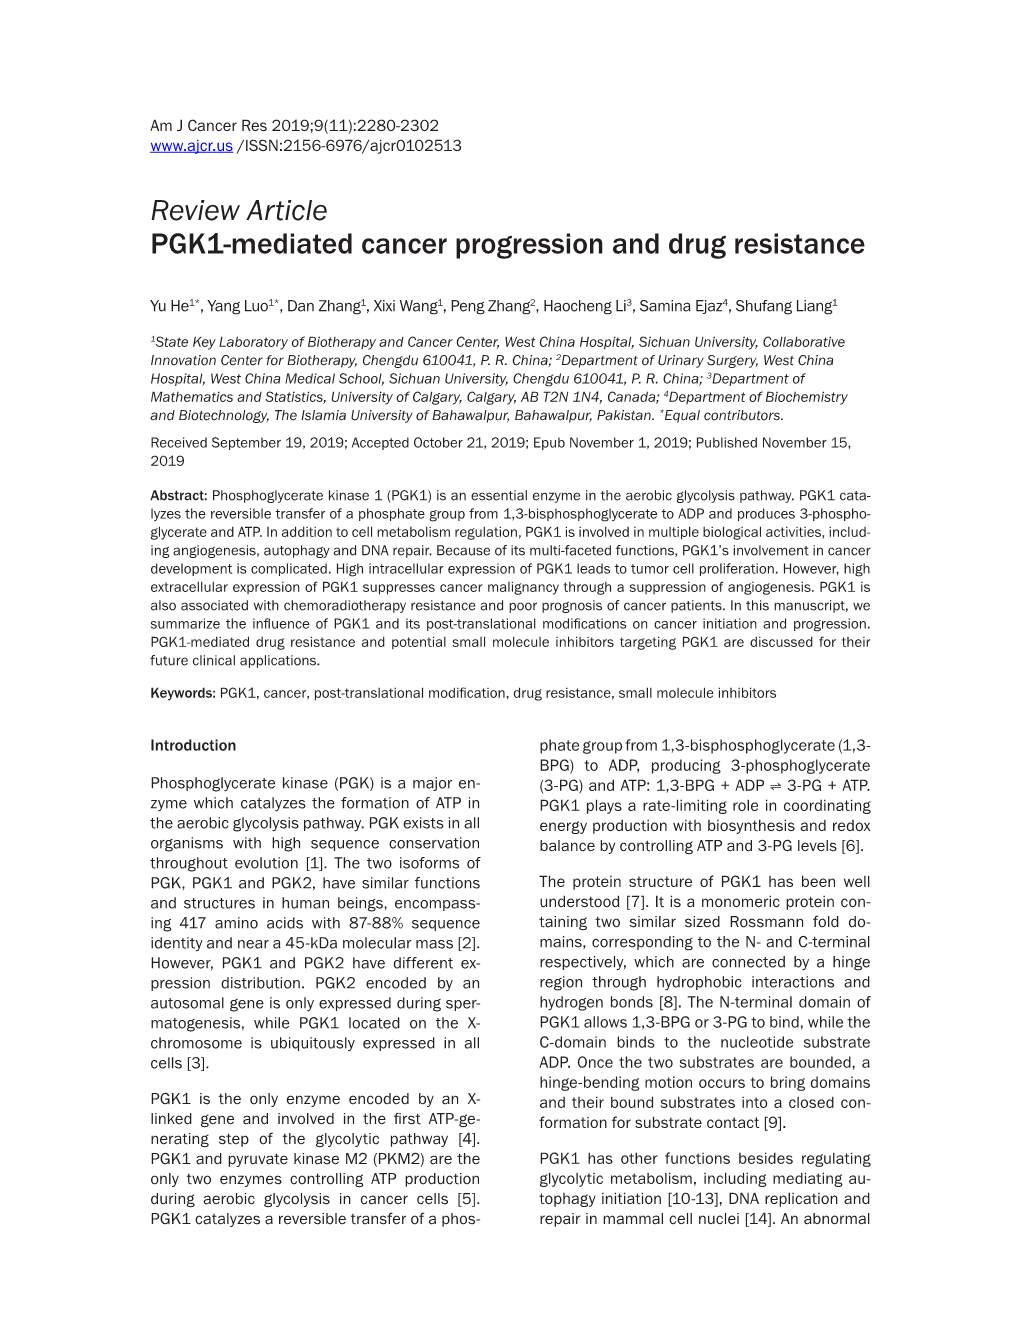 Review Article PGK1-Mediated Cancer Progression and Drug Resistance